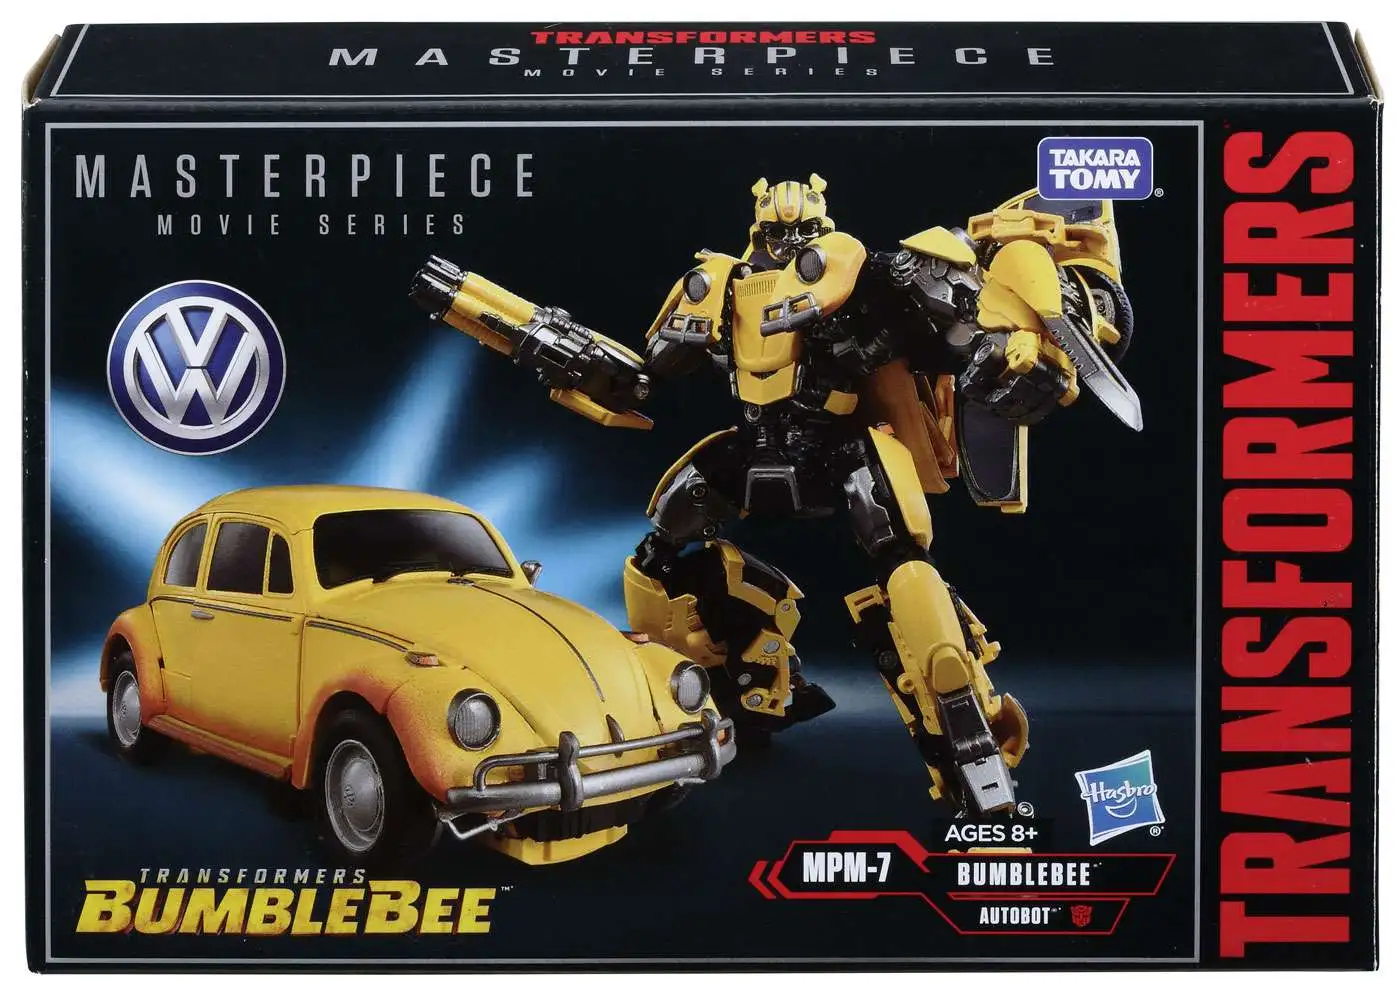 Transformers Masterpiece Movie Series MPM-7 Bumblebee TAKARA TOMY JAPAN NEW F/S 